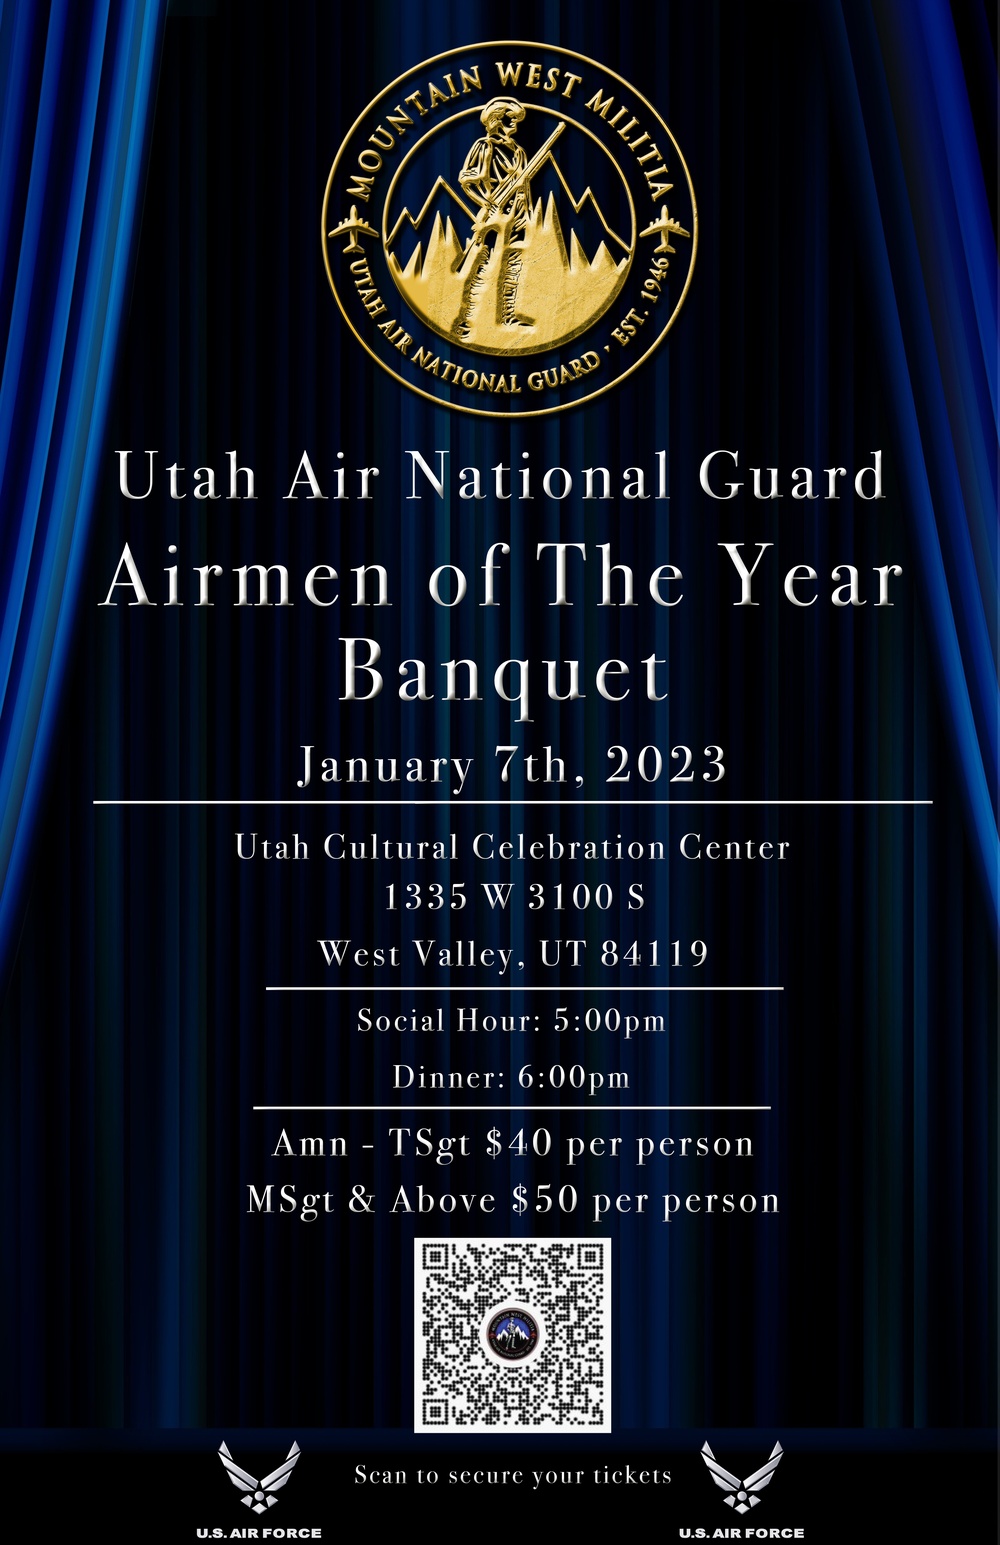 Utah Air National Guard Airmen of the Year Banquet Flyer